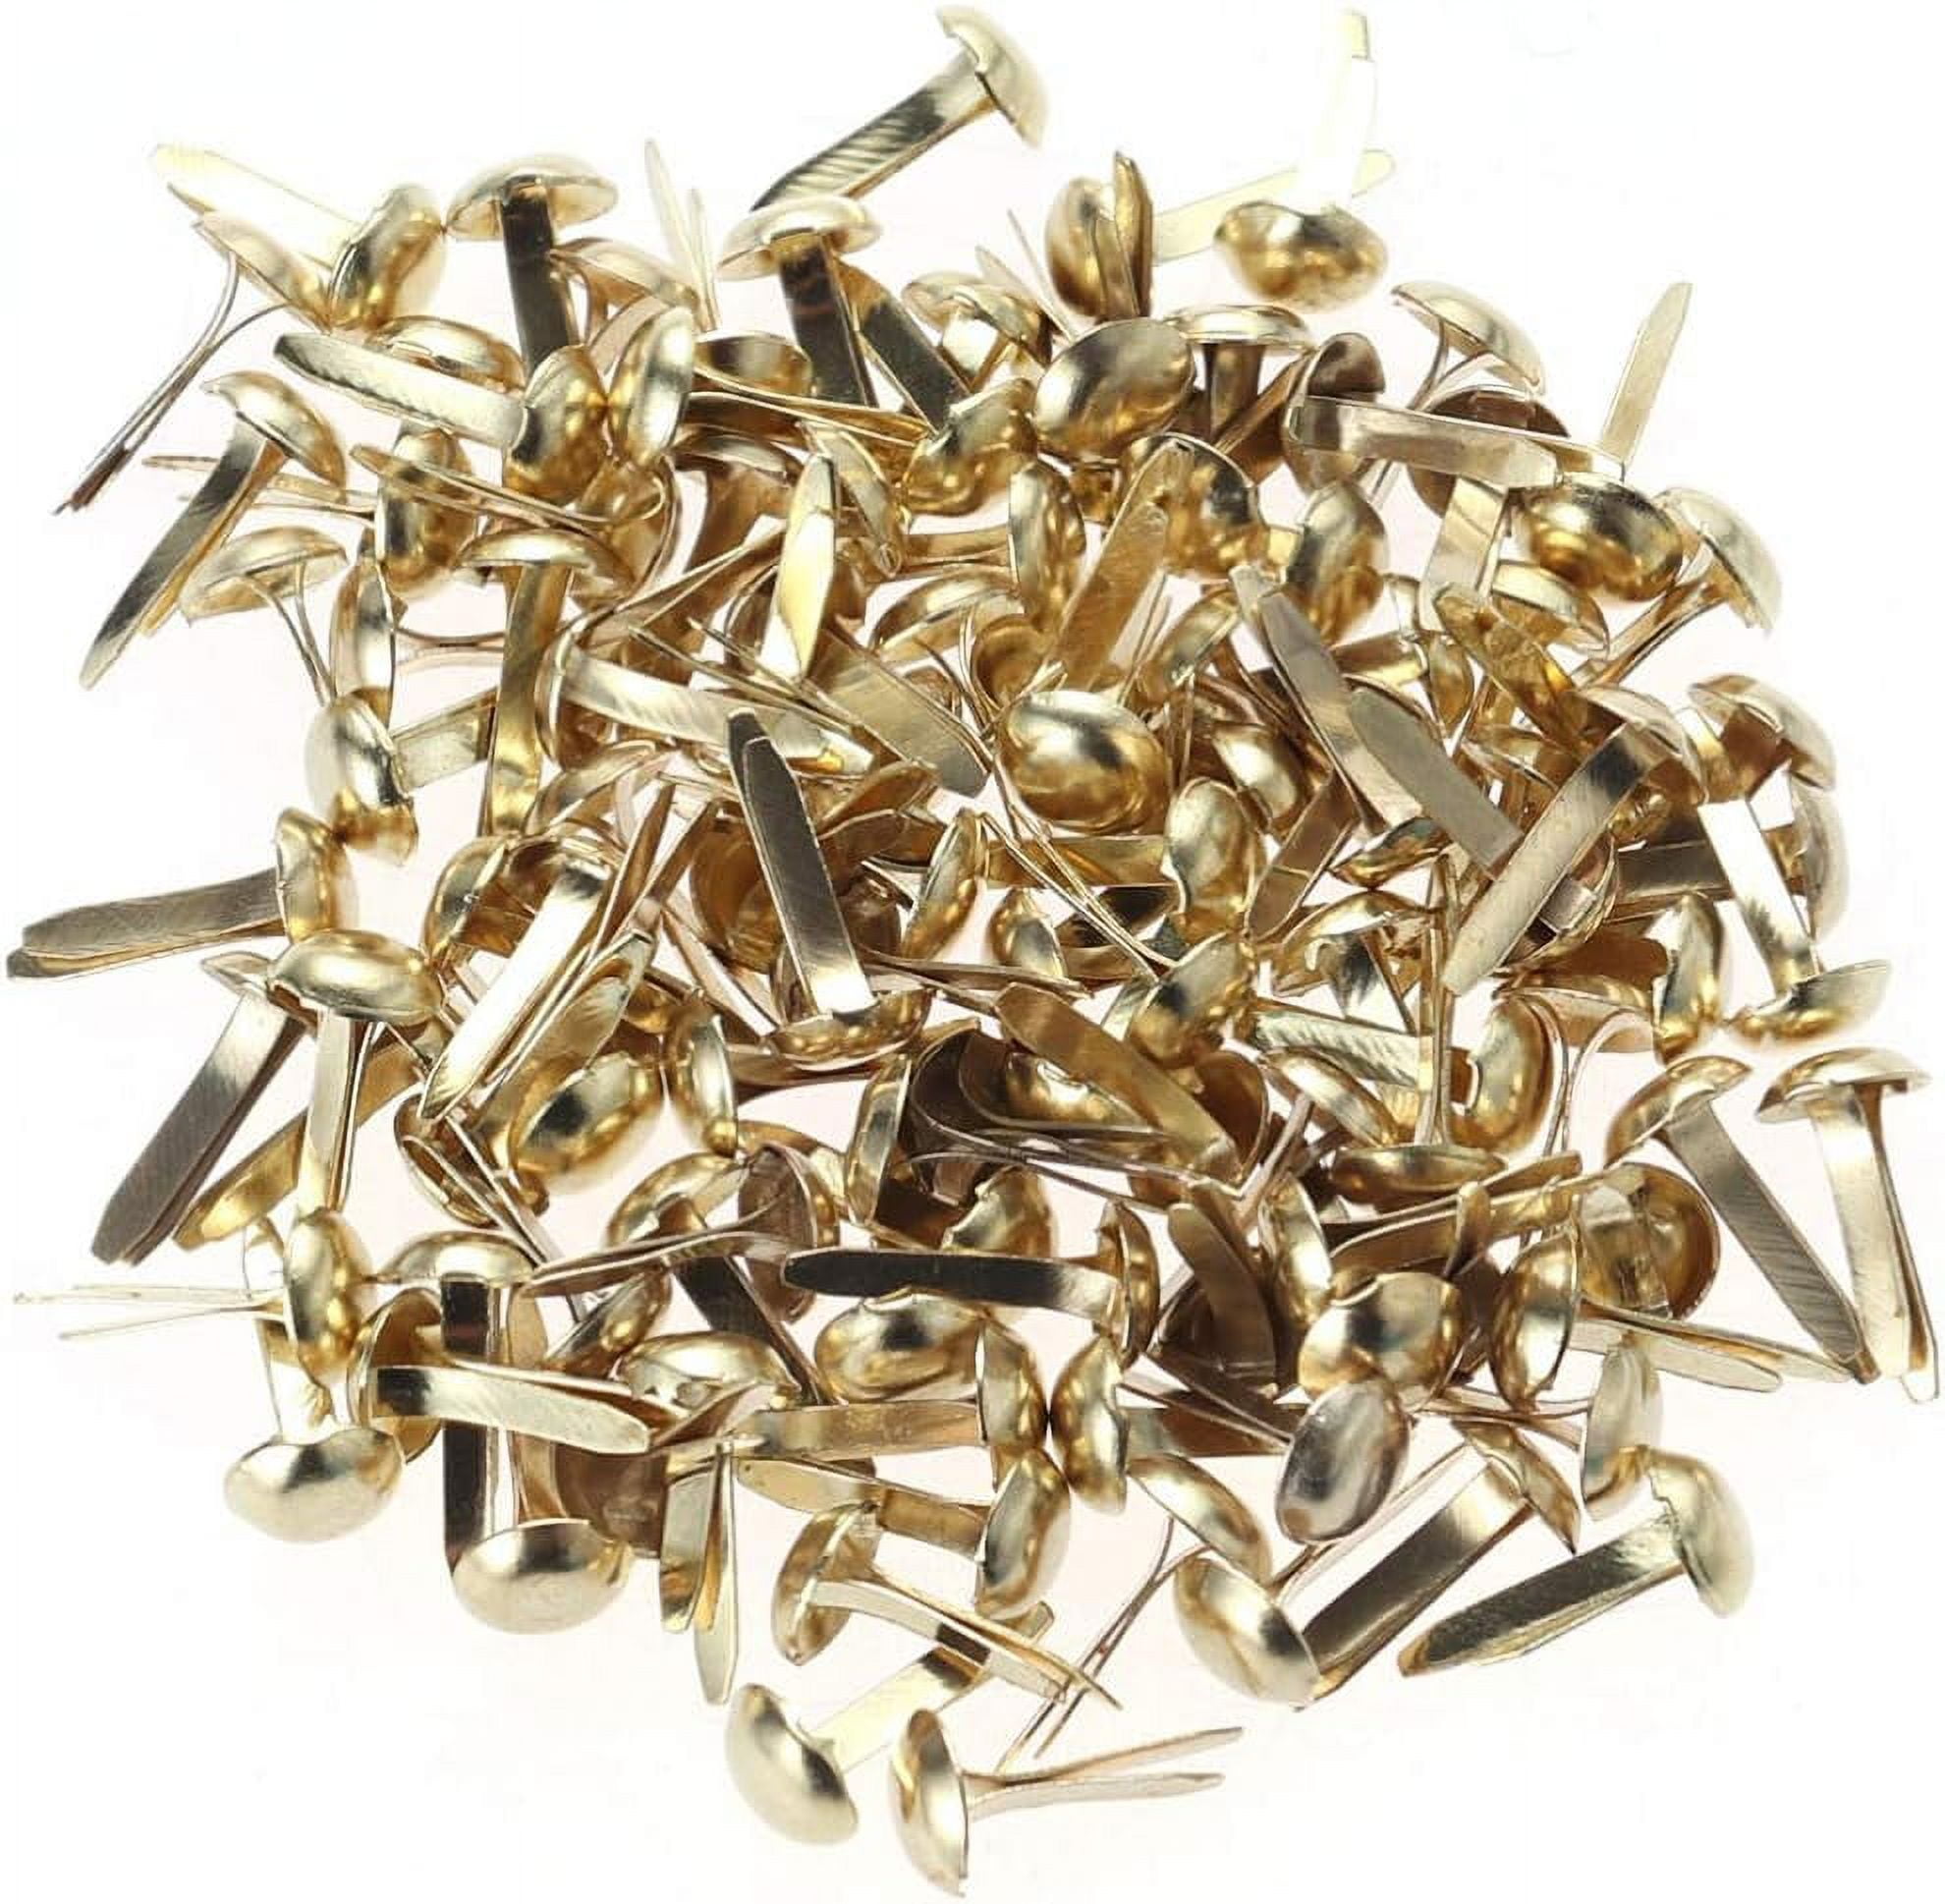 Golden) for Paper Crafts 100 Pcs - Round Mini Paper Fastener Brass